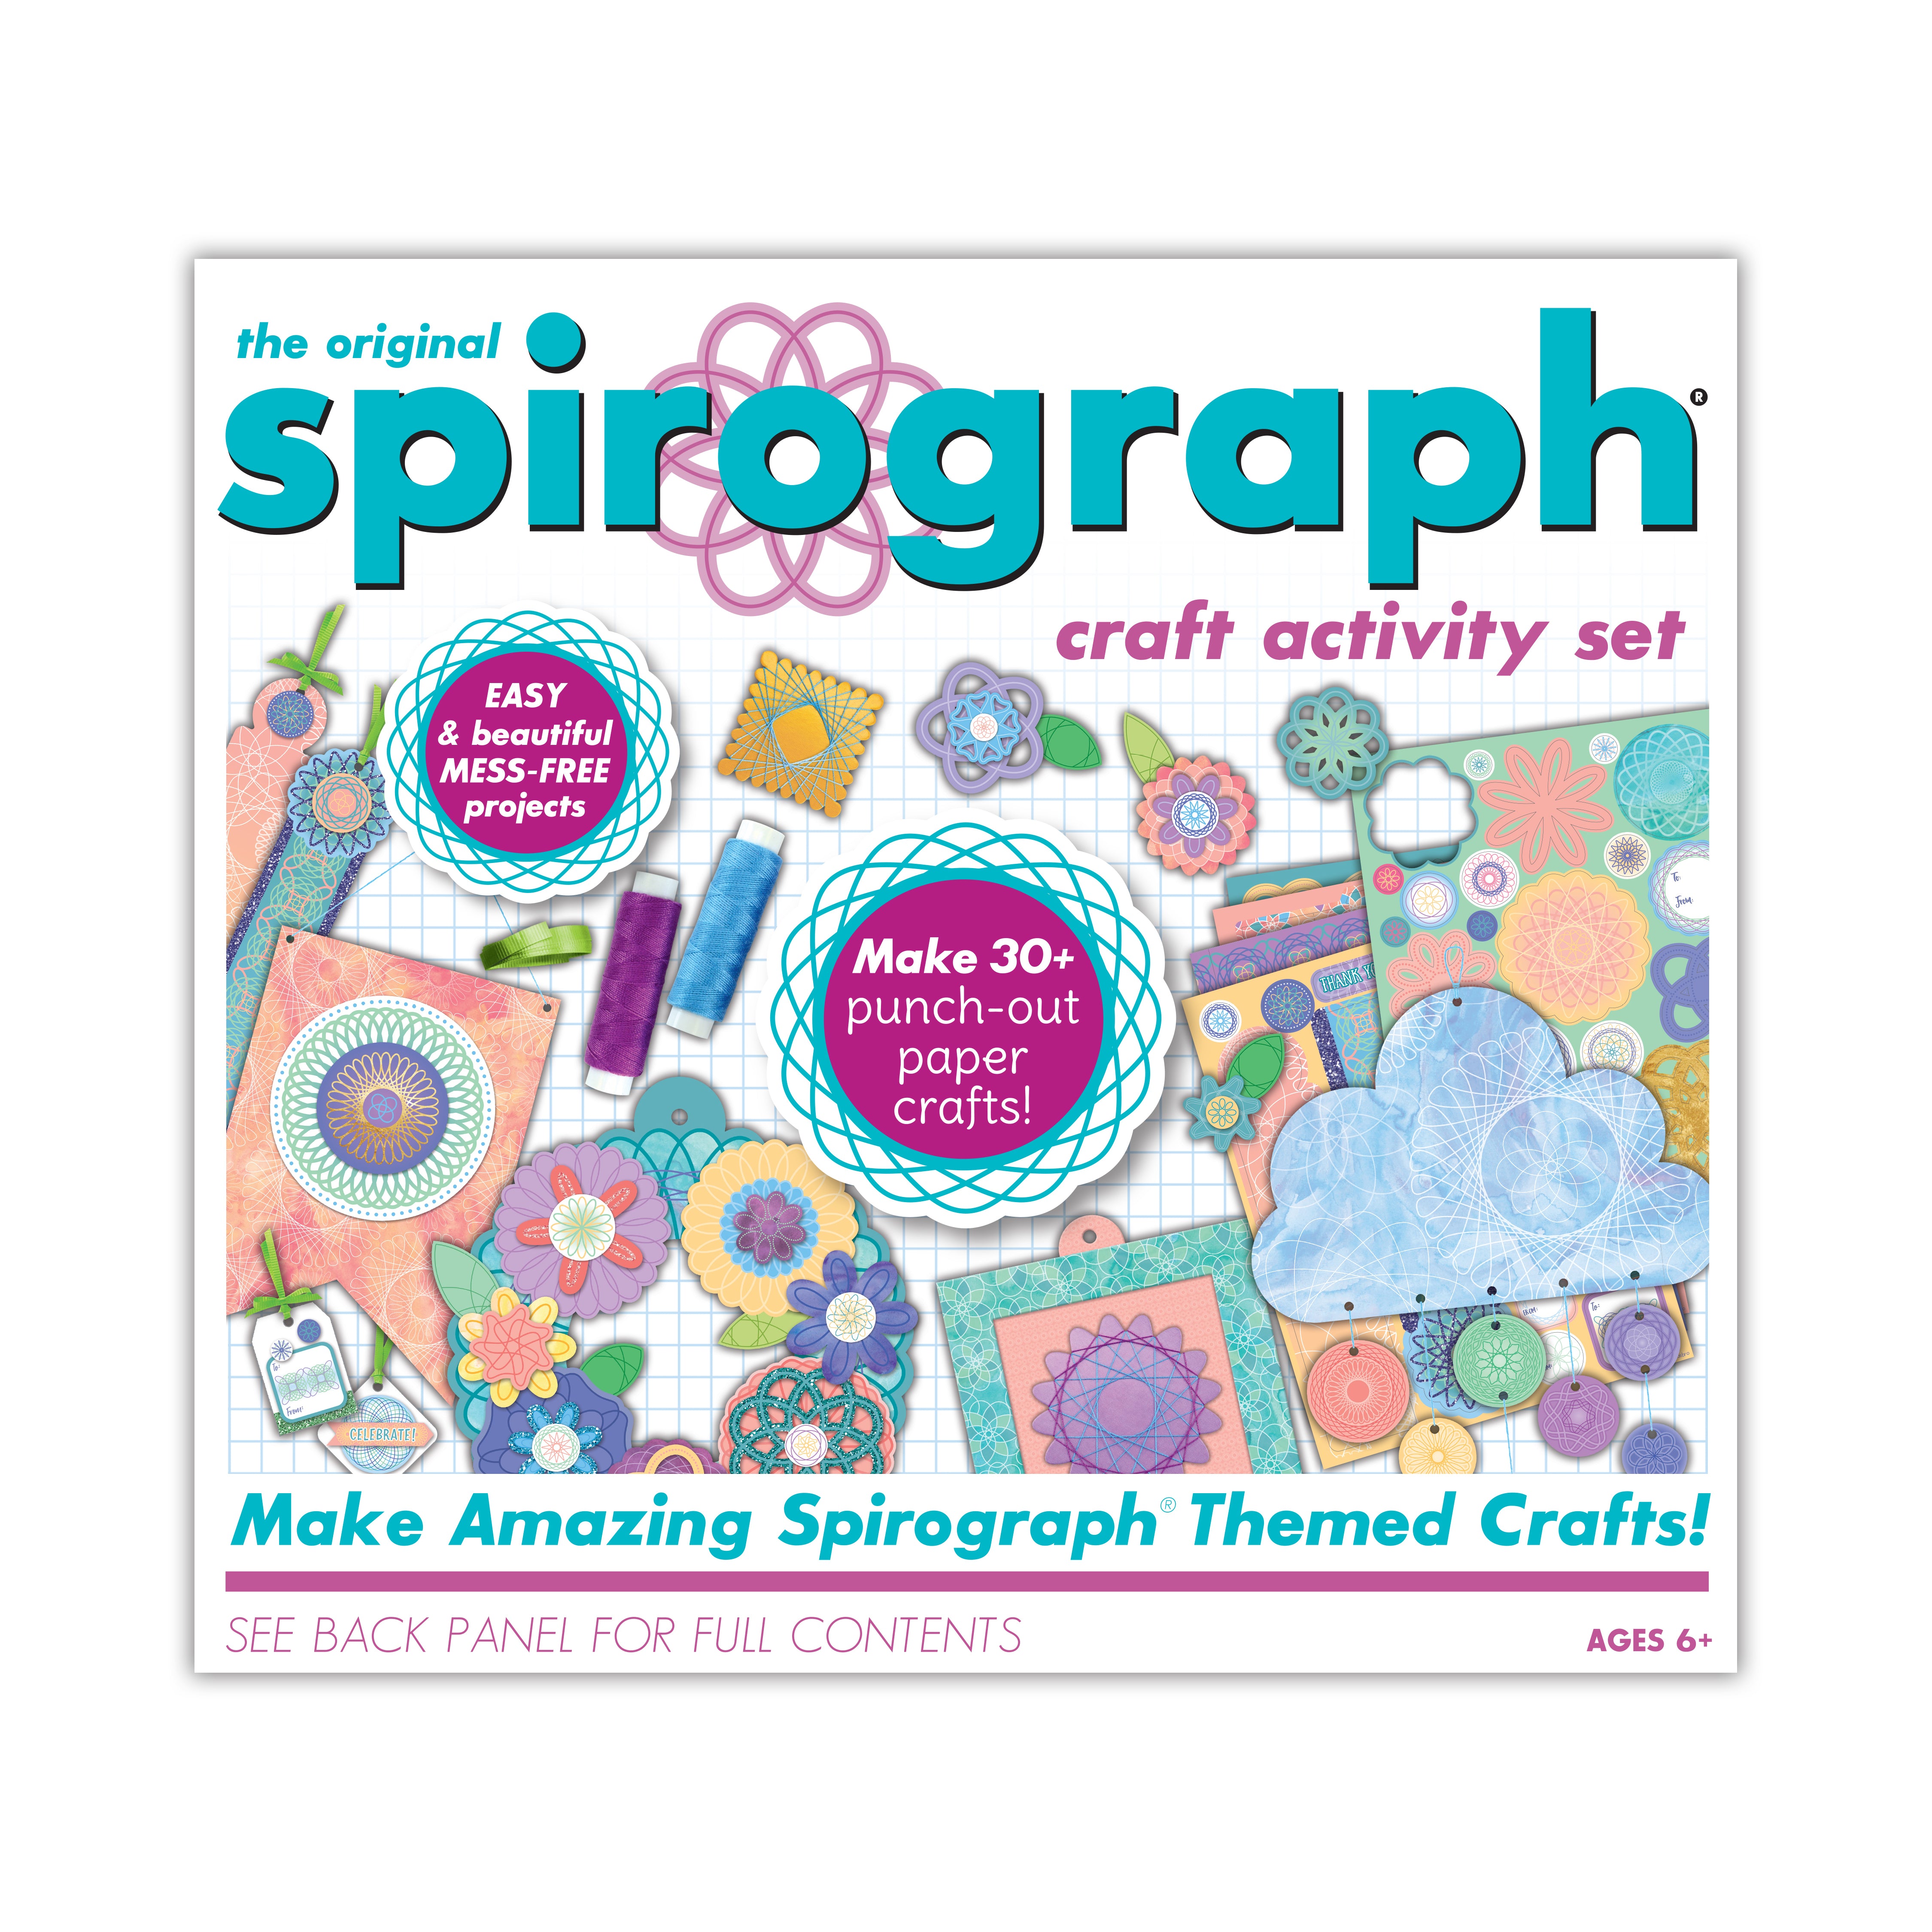 Spirograph Design Tin Set Original Super Deluxe Toy Kids Art Case